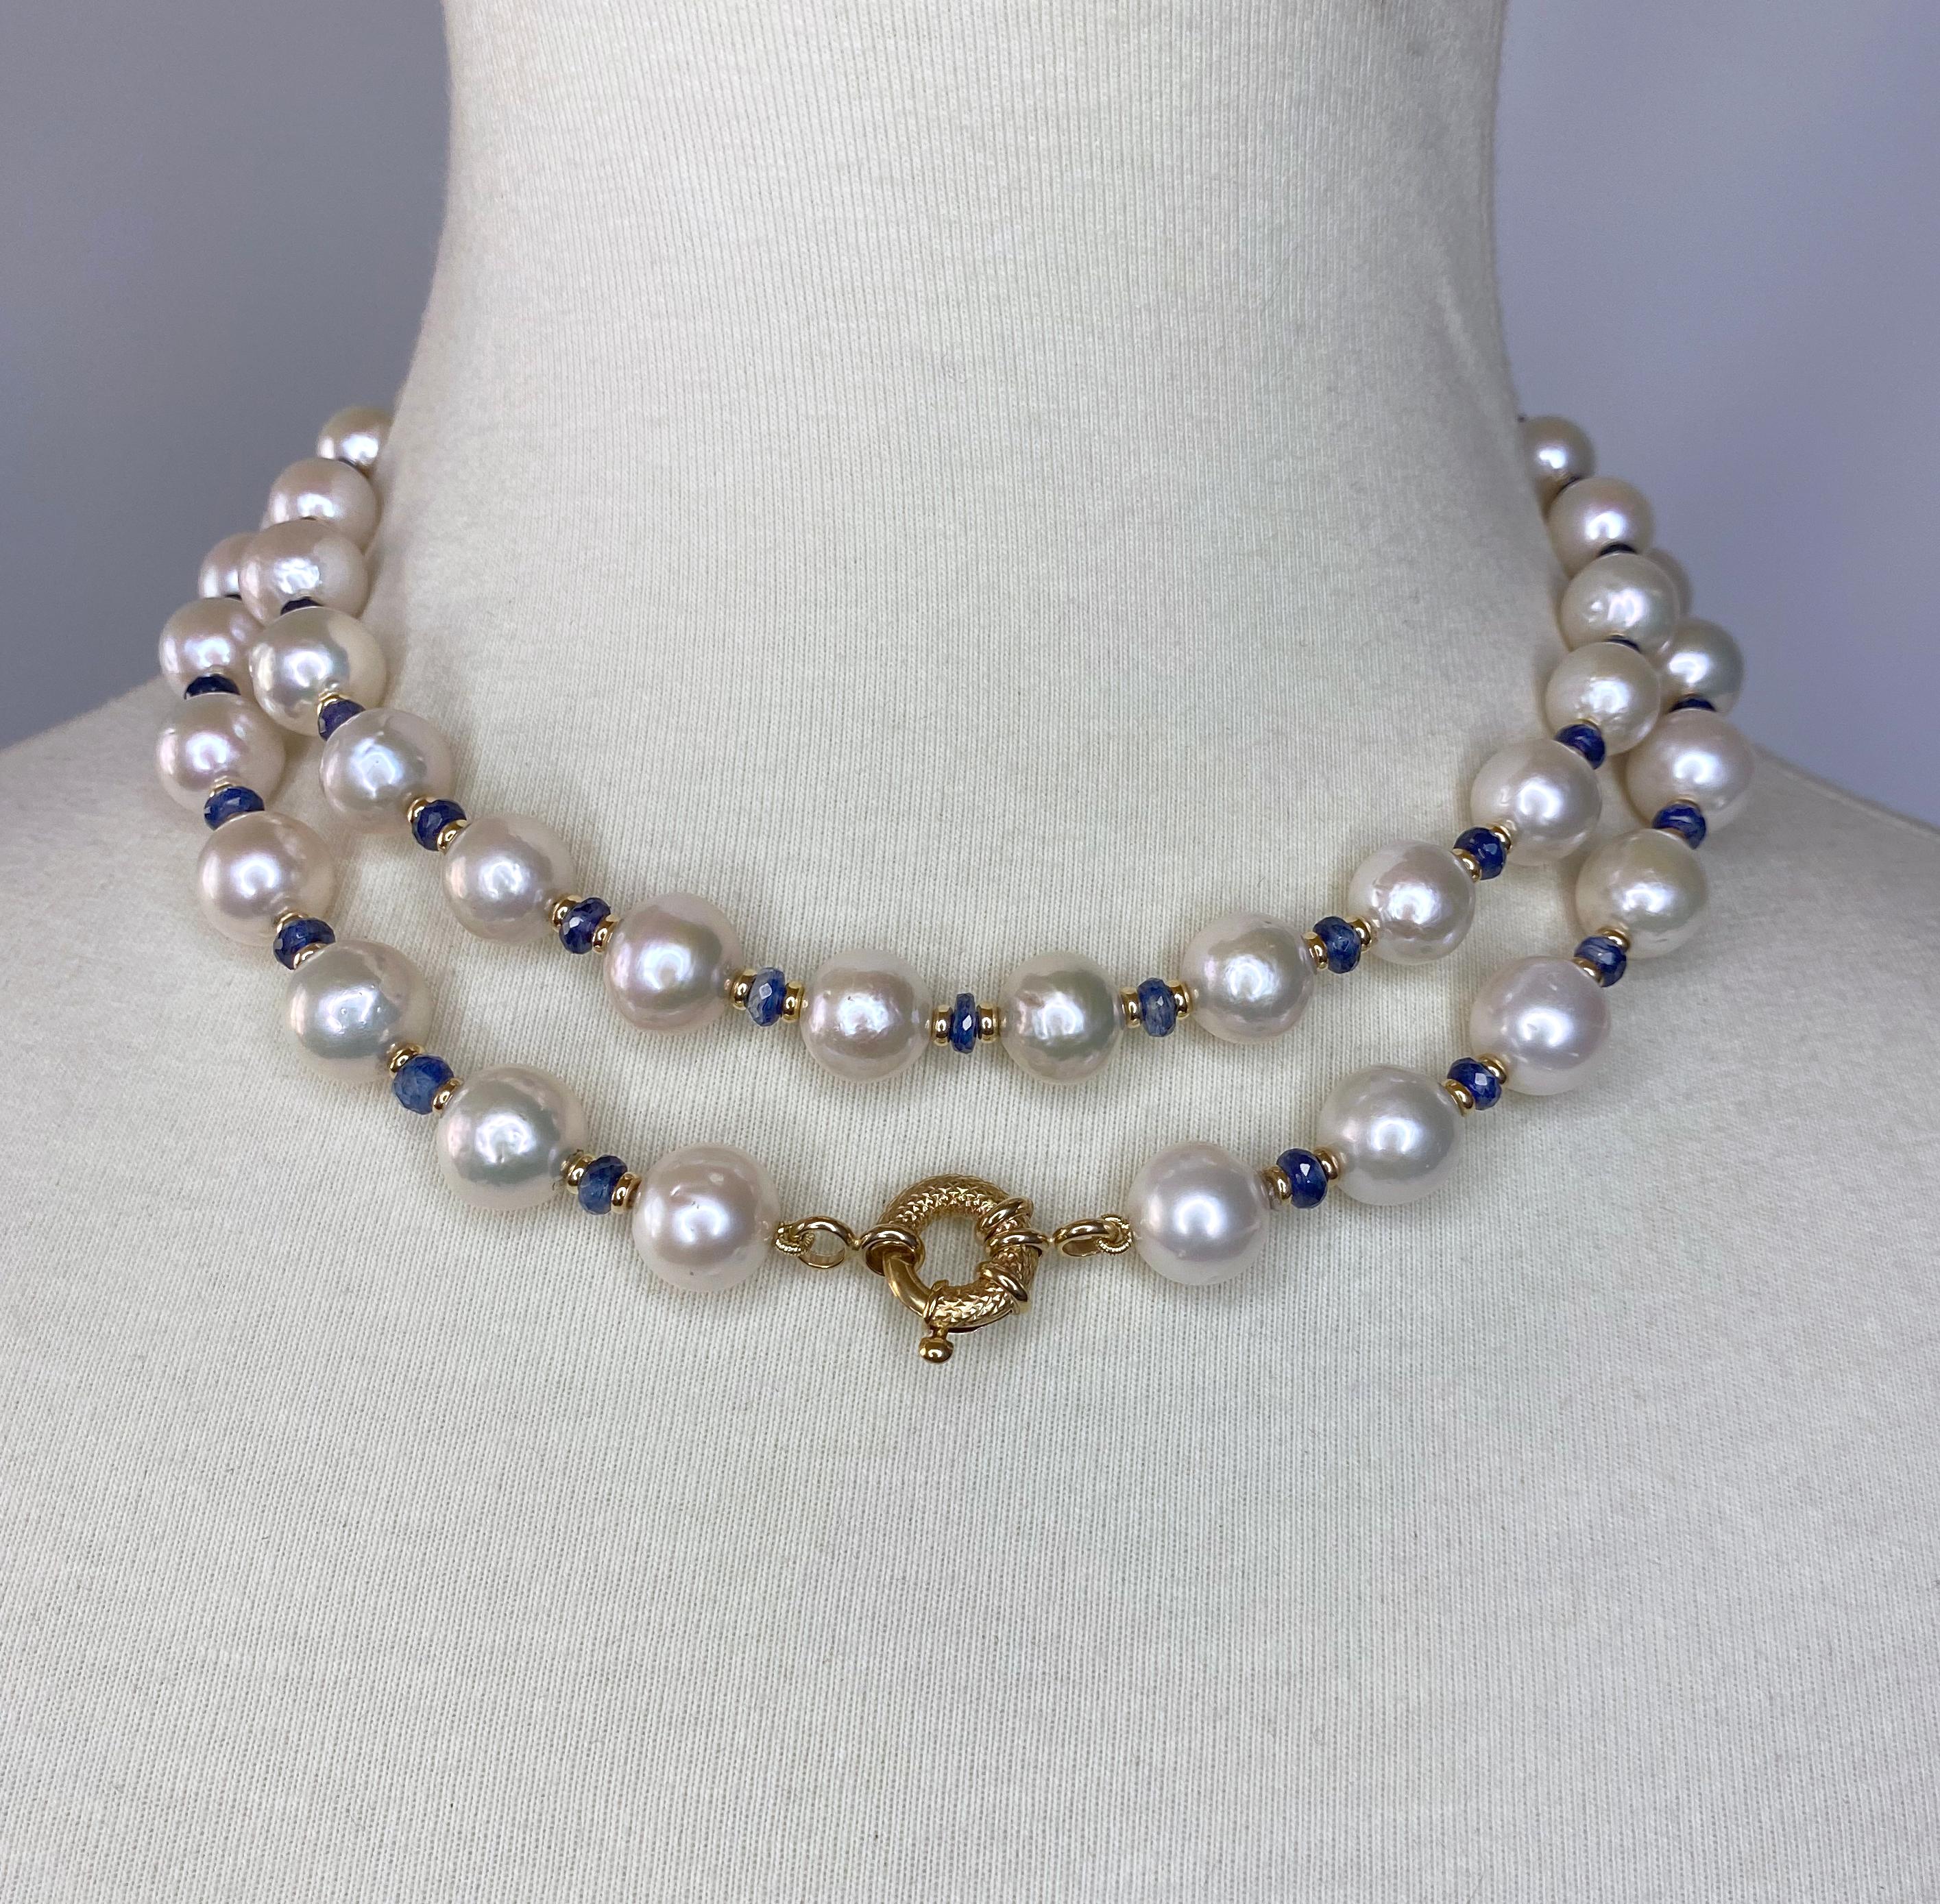 Artisan Marina J. Sautoir en or jaune 14 carats avec saphirs bleus facettés et perles